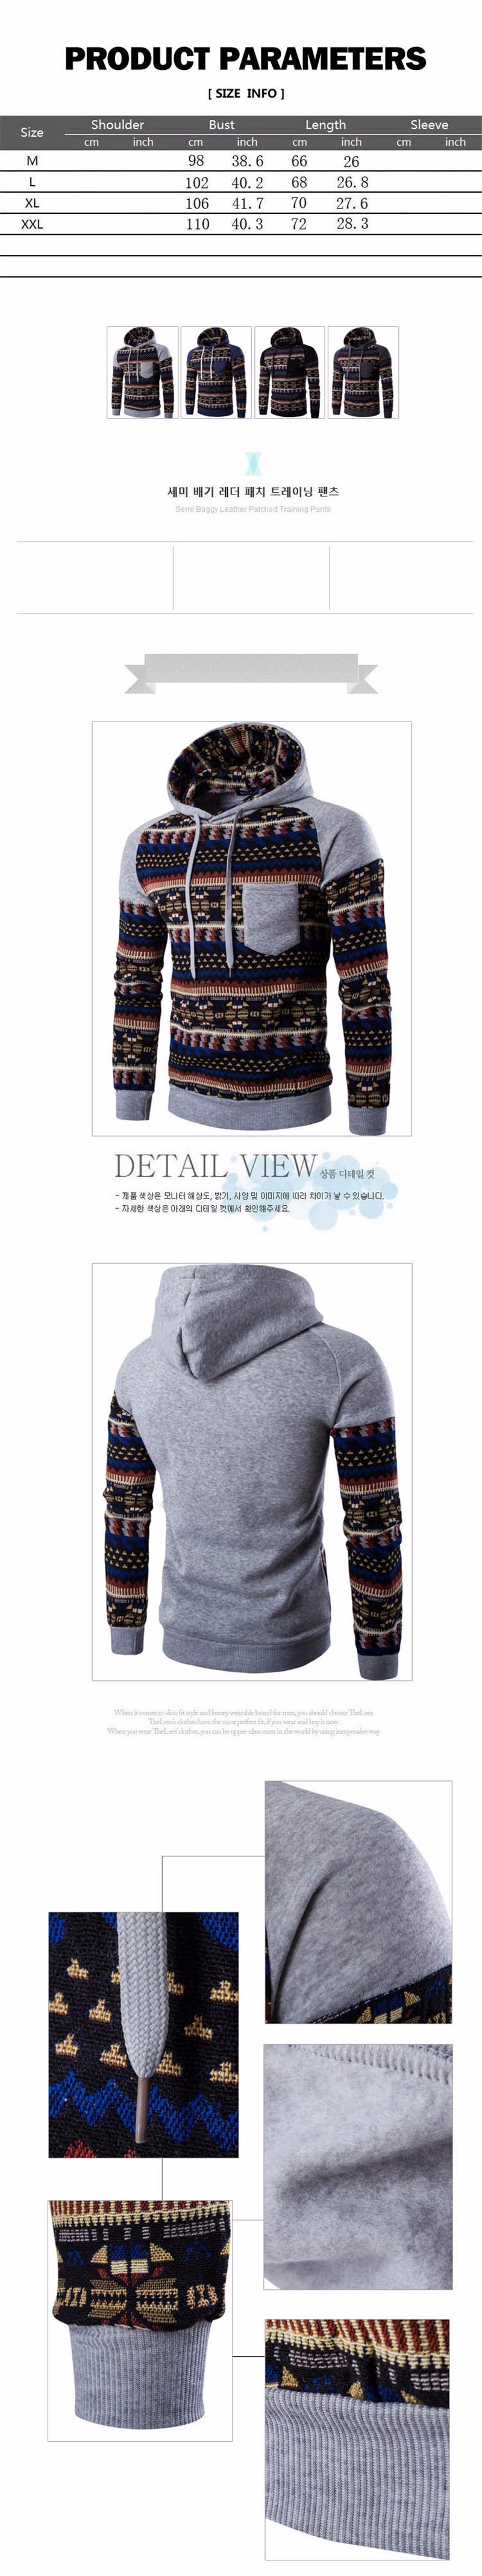 New-Arrival-Brand-Hoodie-Sweatshirt-Men-Spring-Fashion-Brand-Clothing-Printed-Hoodies-Men-Casual-Sli-32769466922